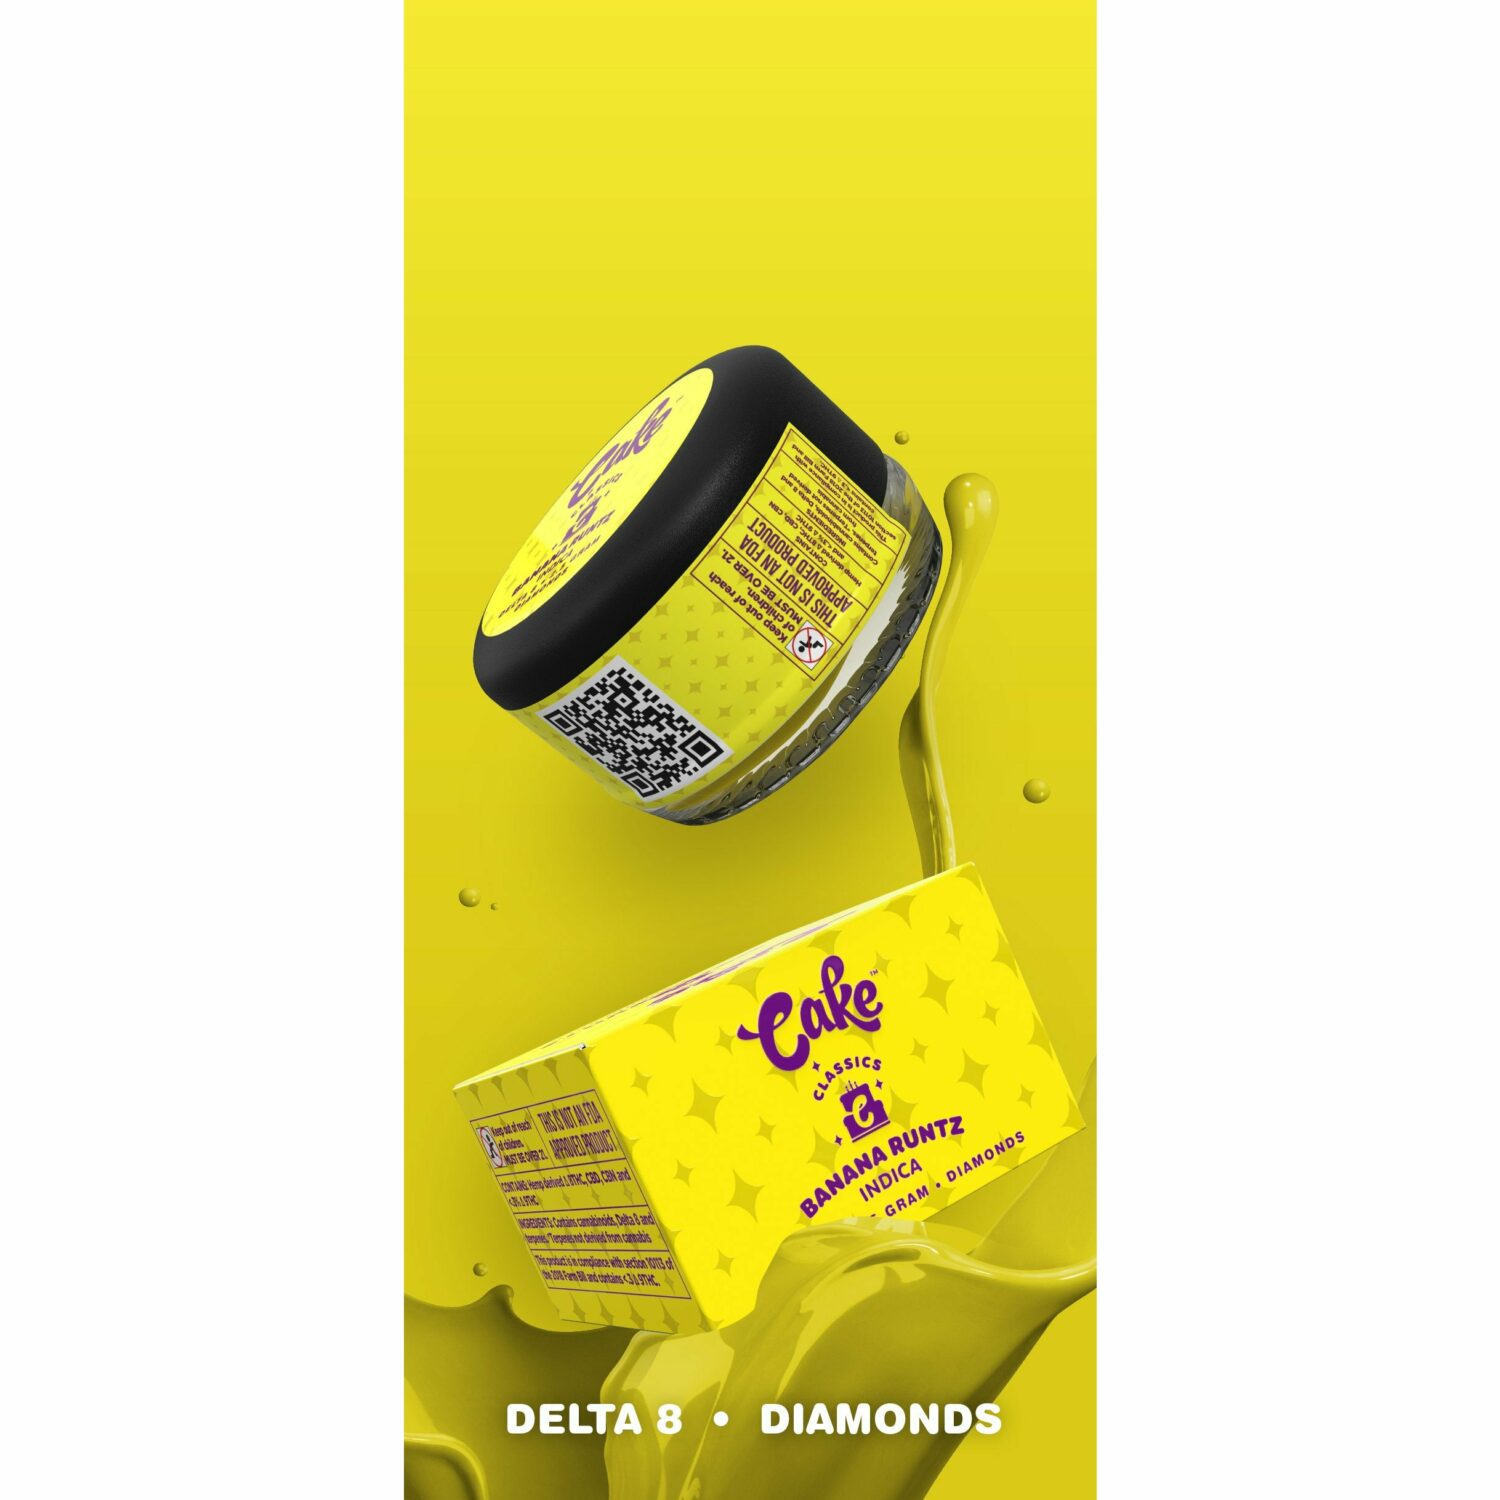 D8-Gas-Cake-Banana-Runtz-Diamonds-Delta-8-scaled-1.jpg